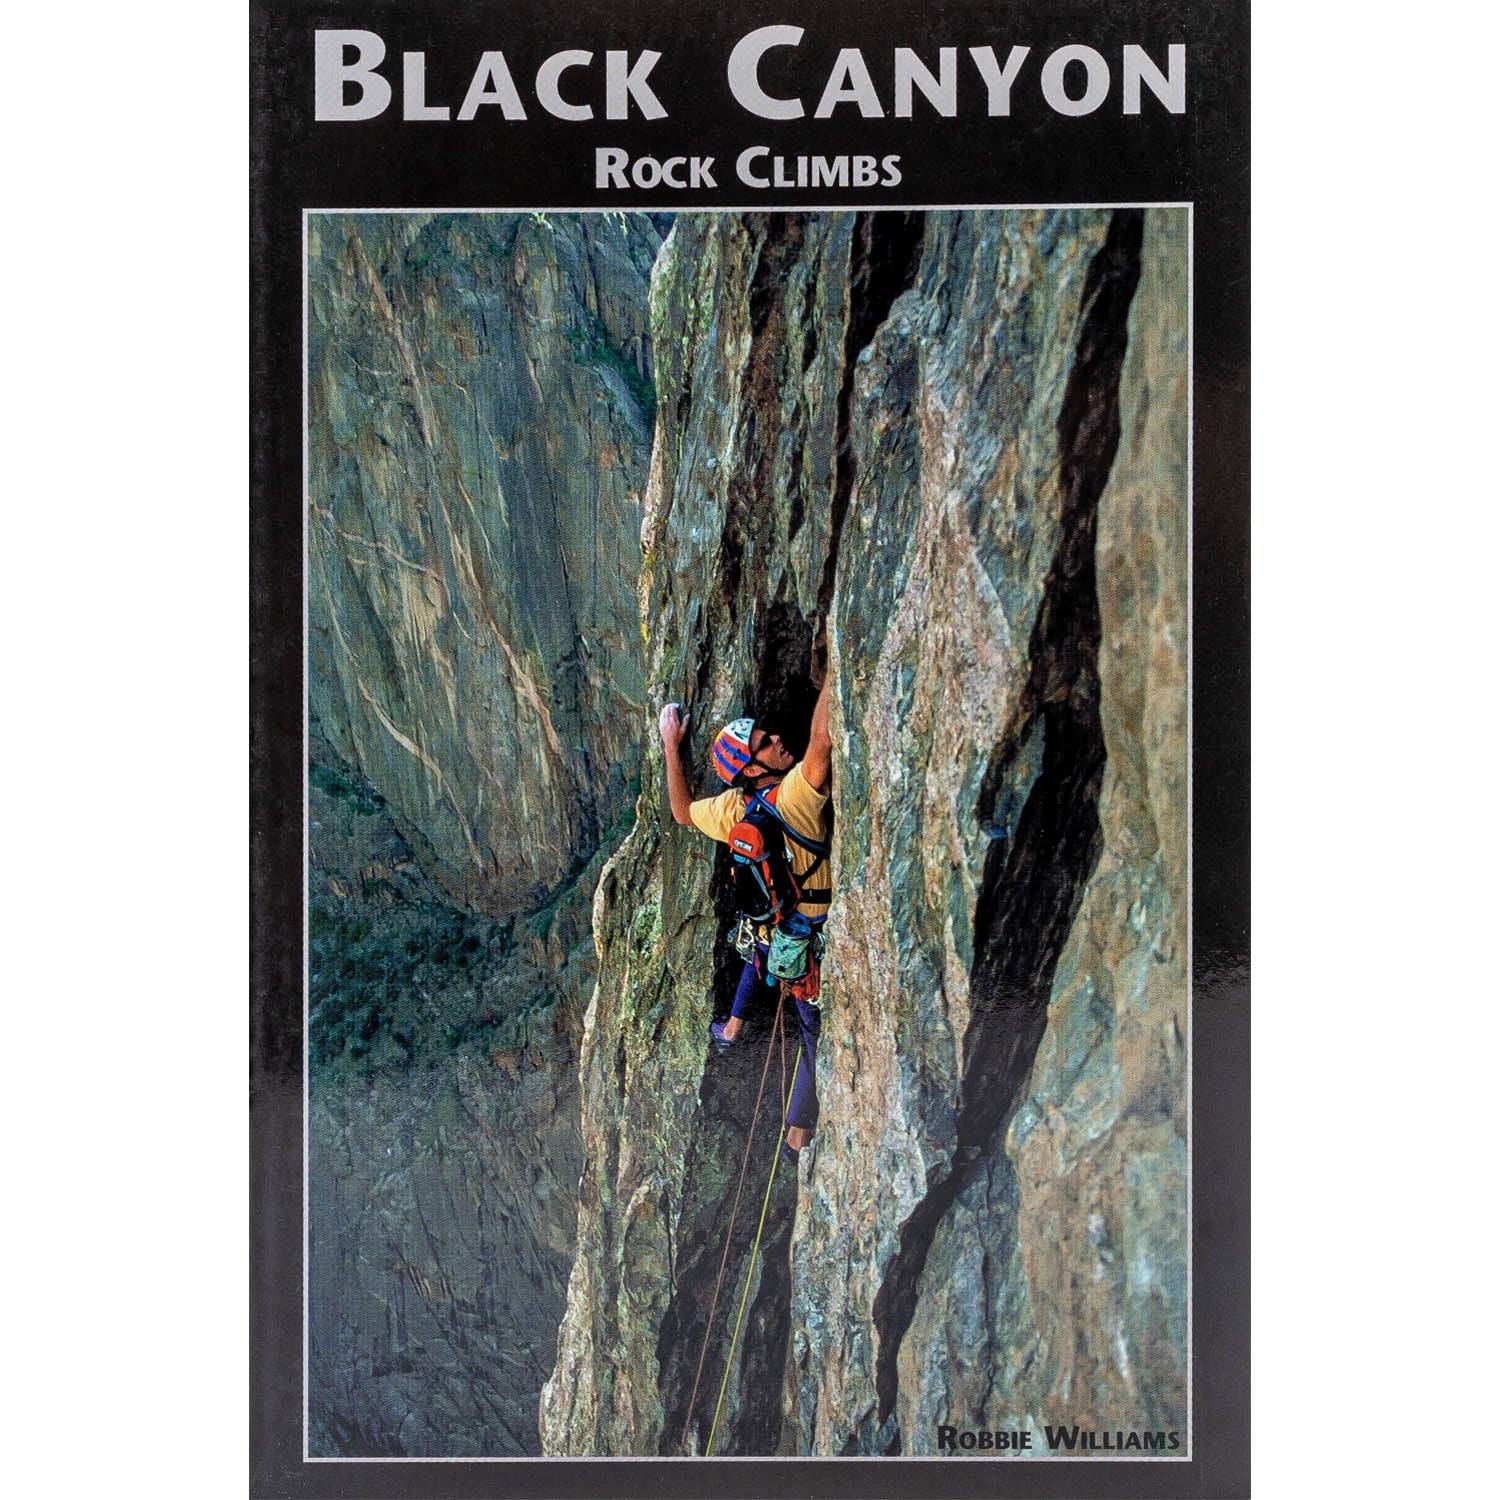 Black Canyon Rock Climbs